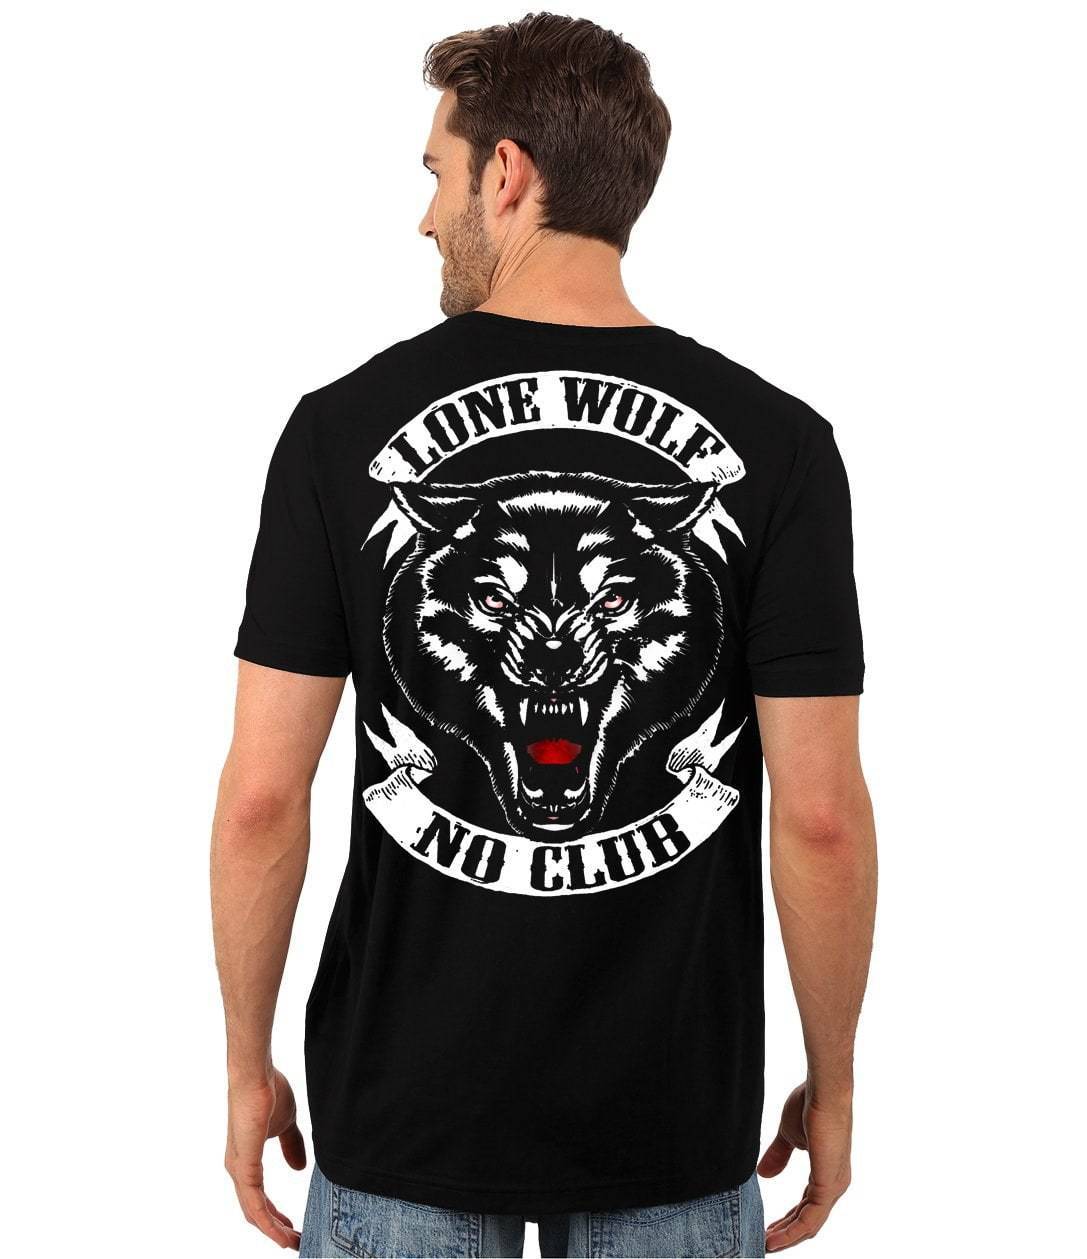 A man wearing a Lone Wolf, No Club T-shirt.